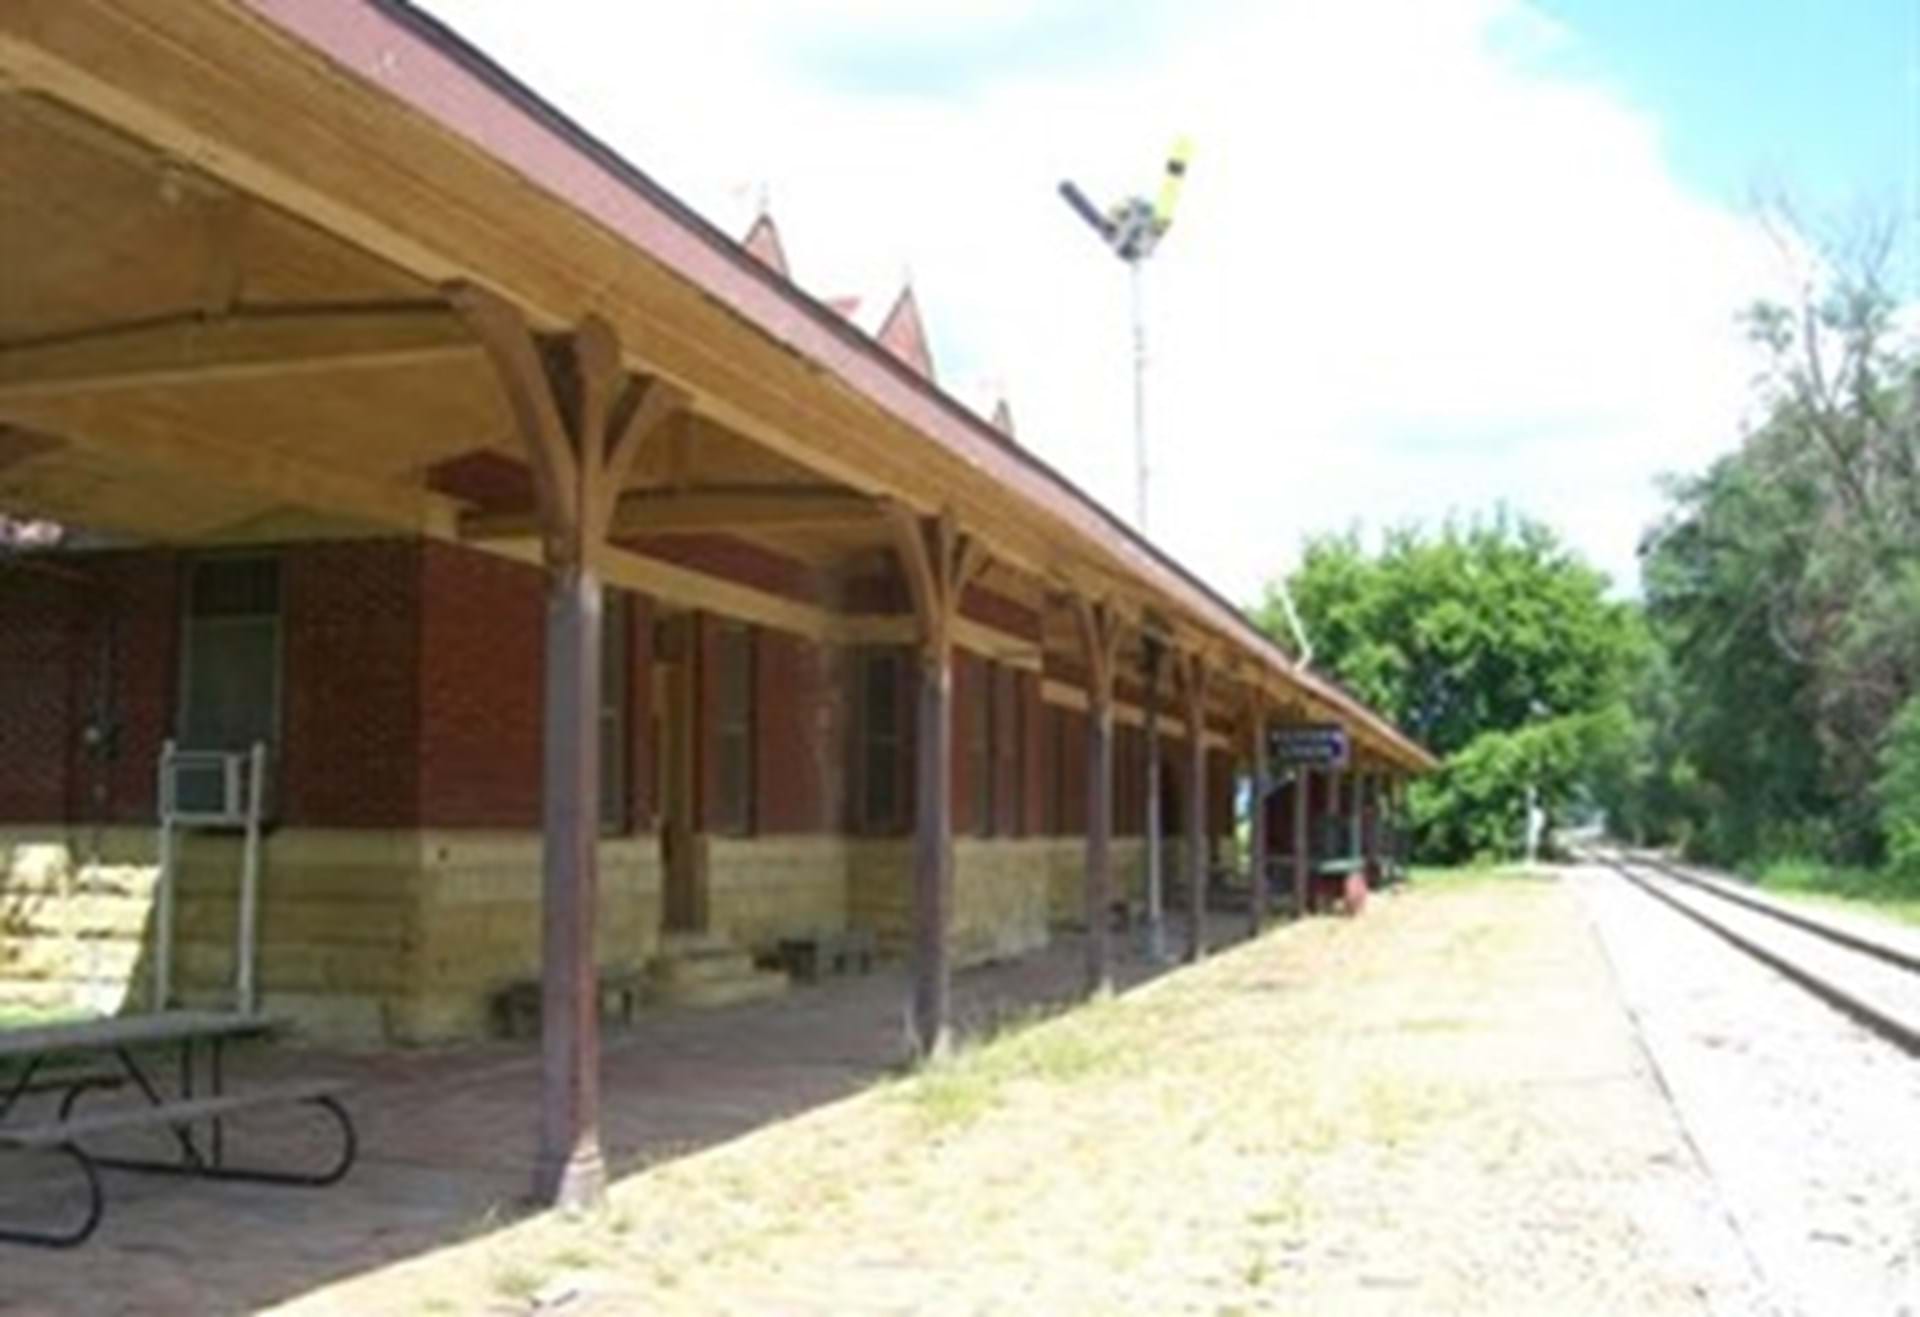 Vinton Depot